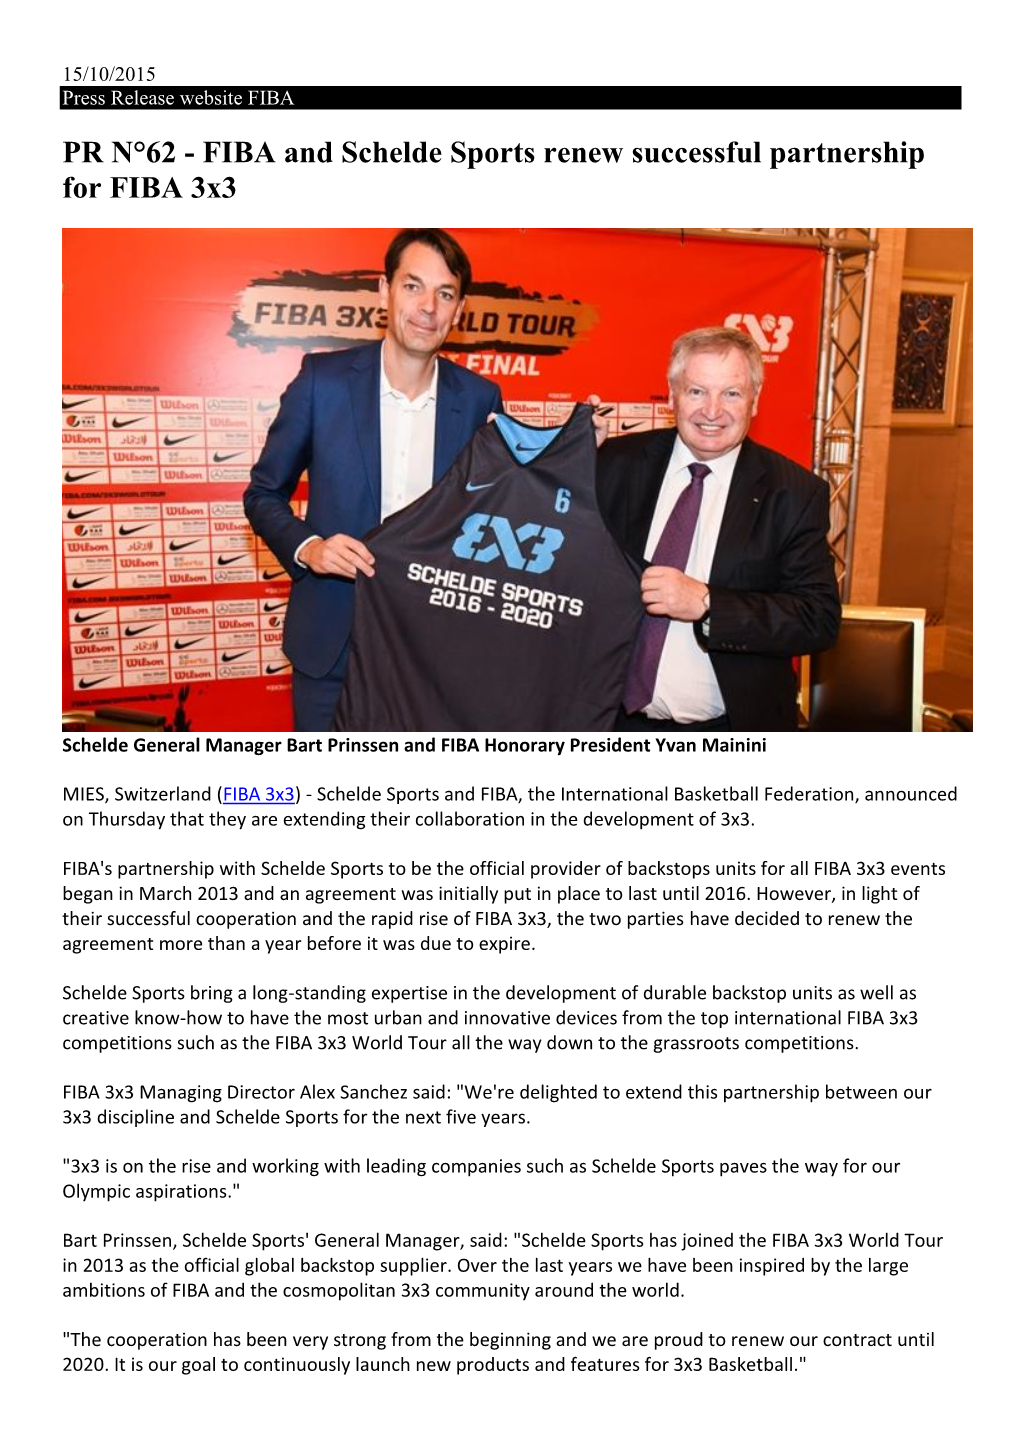 FIBA and Schelde Sports Renew Successful Partnership for FIBA 3X3